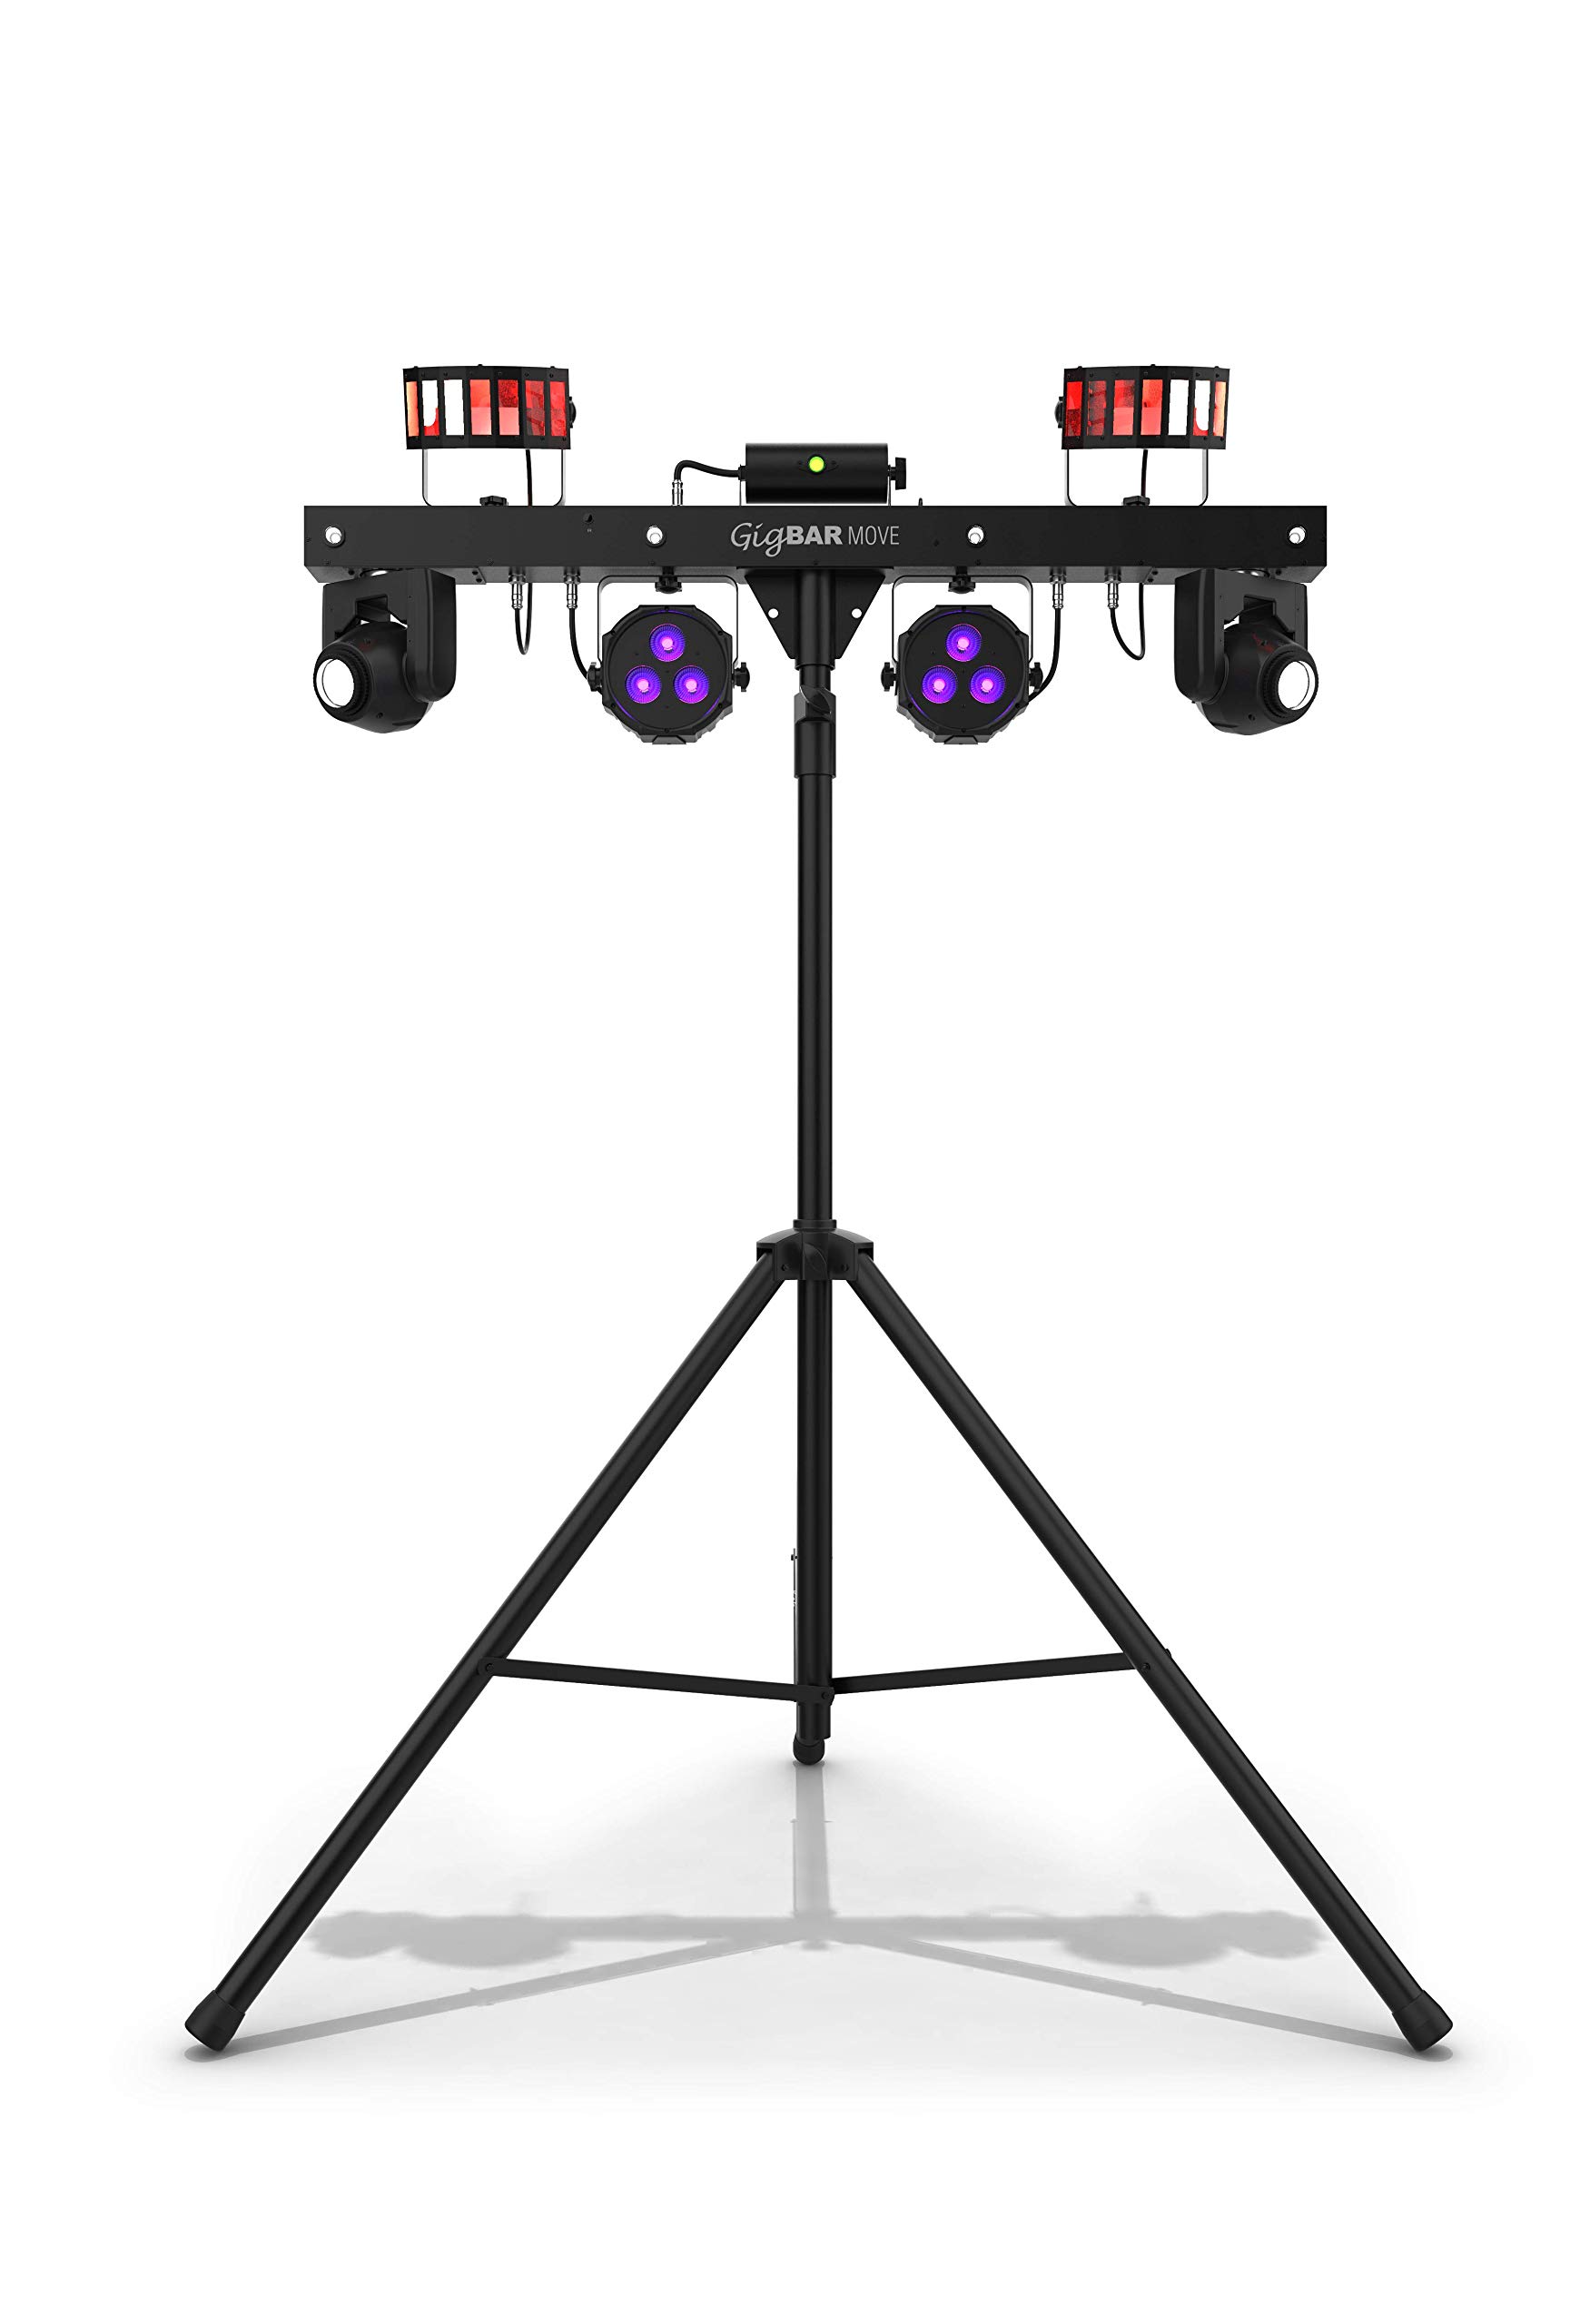 Chauvet DJ GigBAR MOVE 5-in-1 照明システム (ワイヤレスイヤホン付き)...